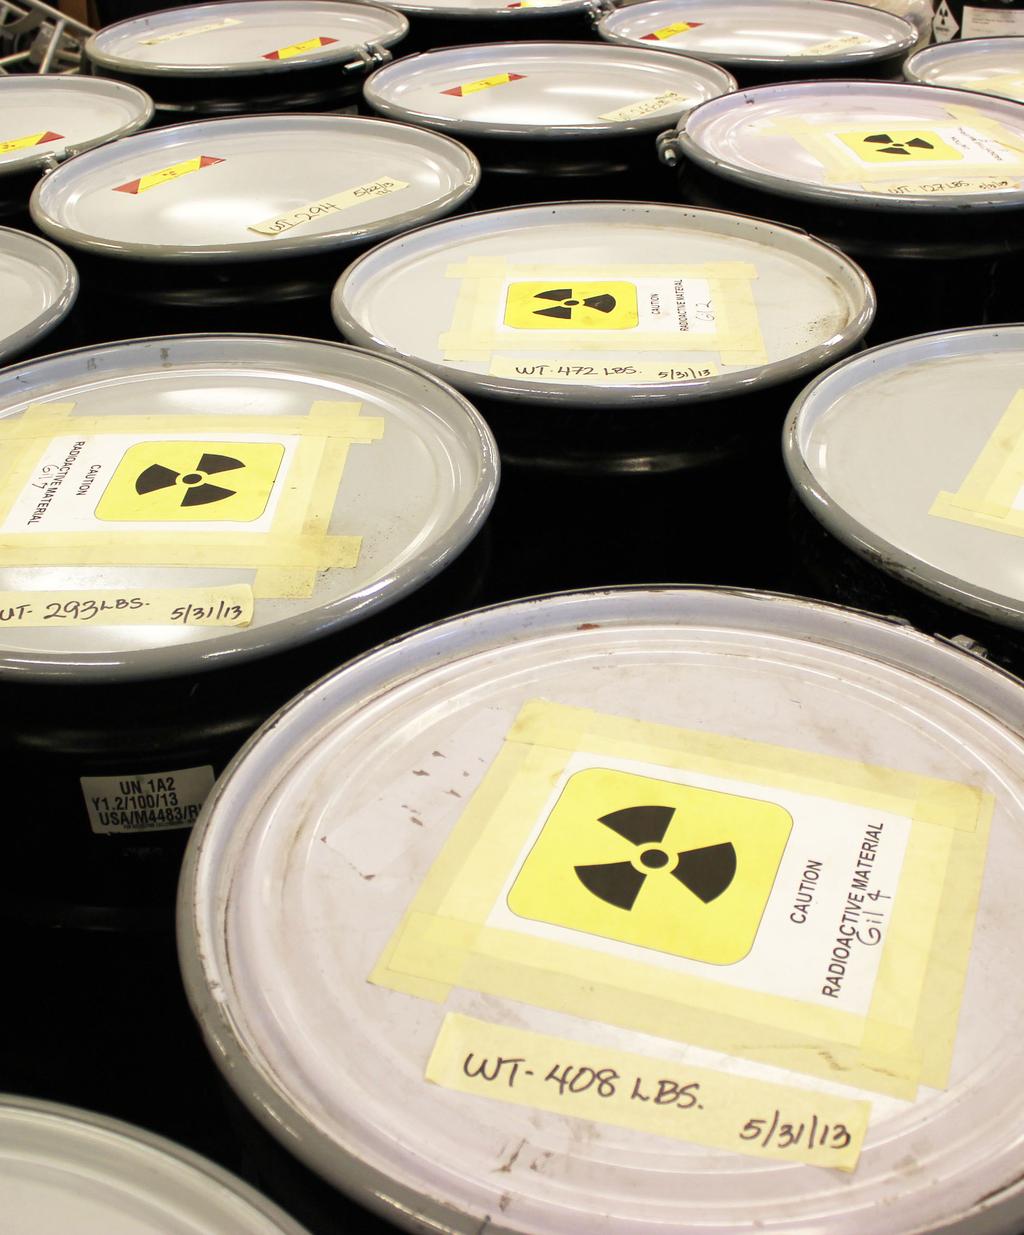 Radioactive Waste Requirements October